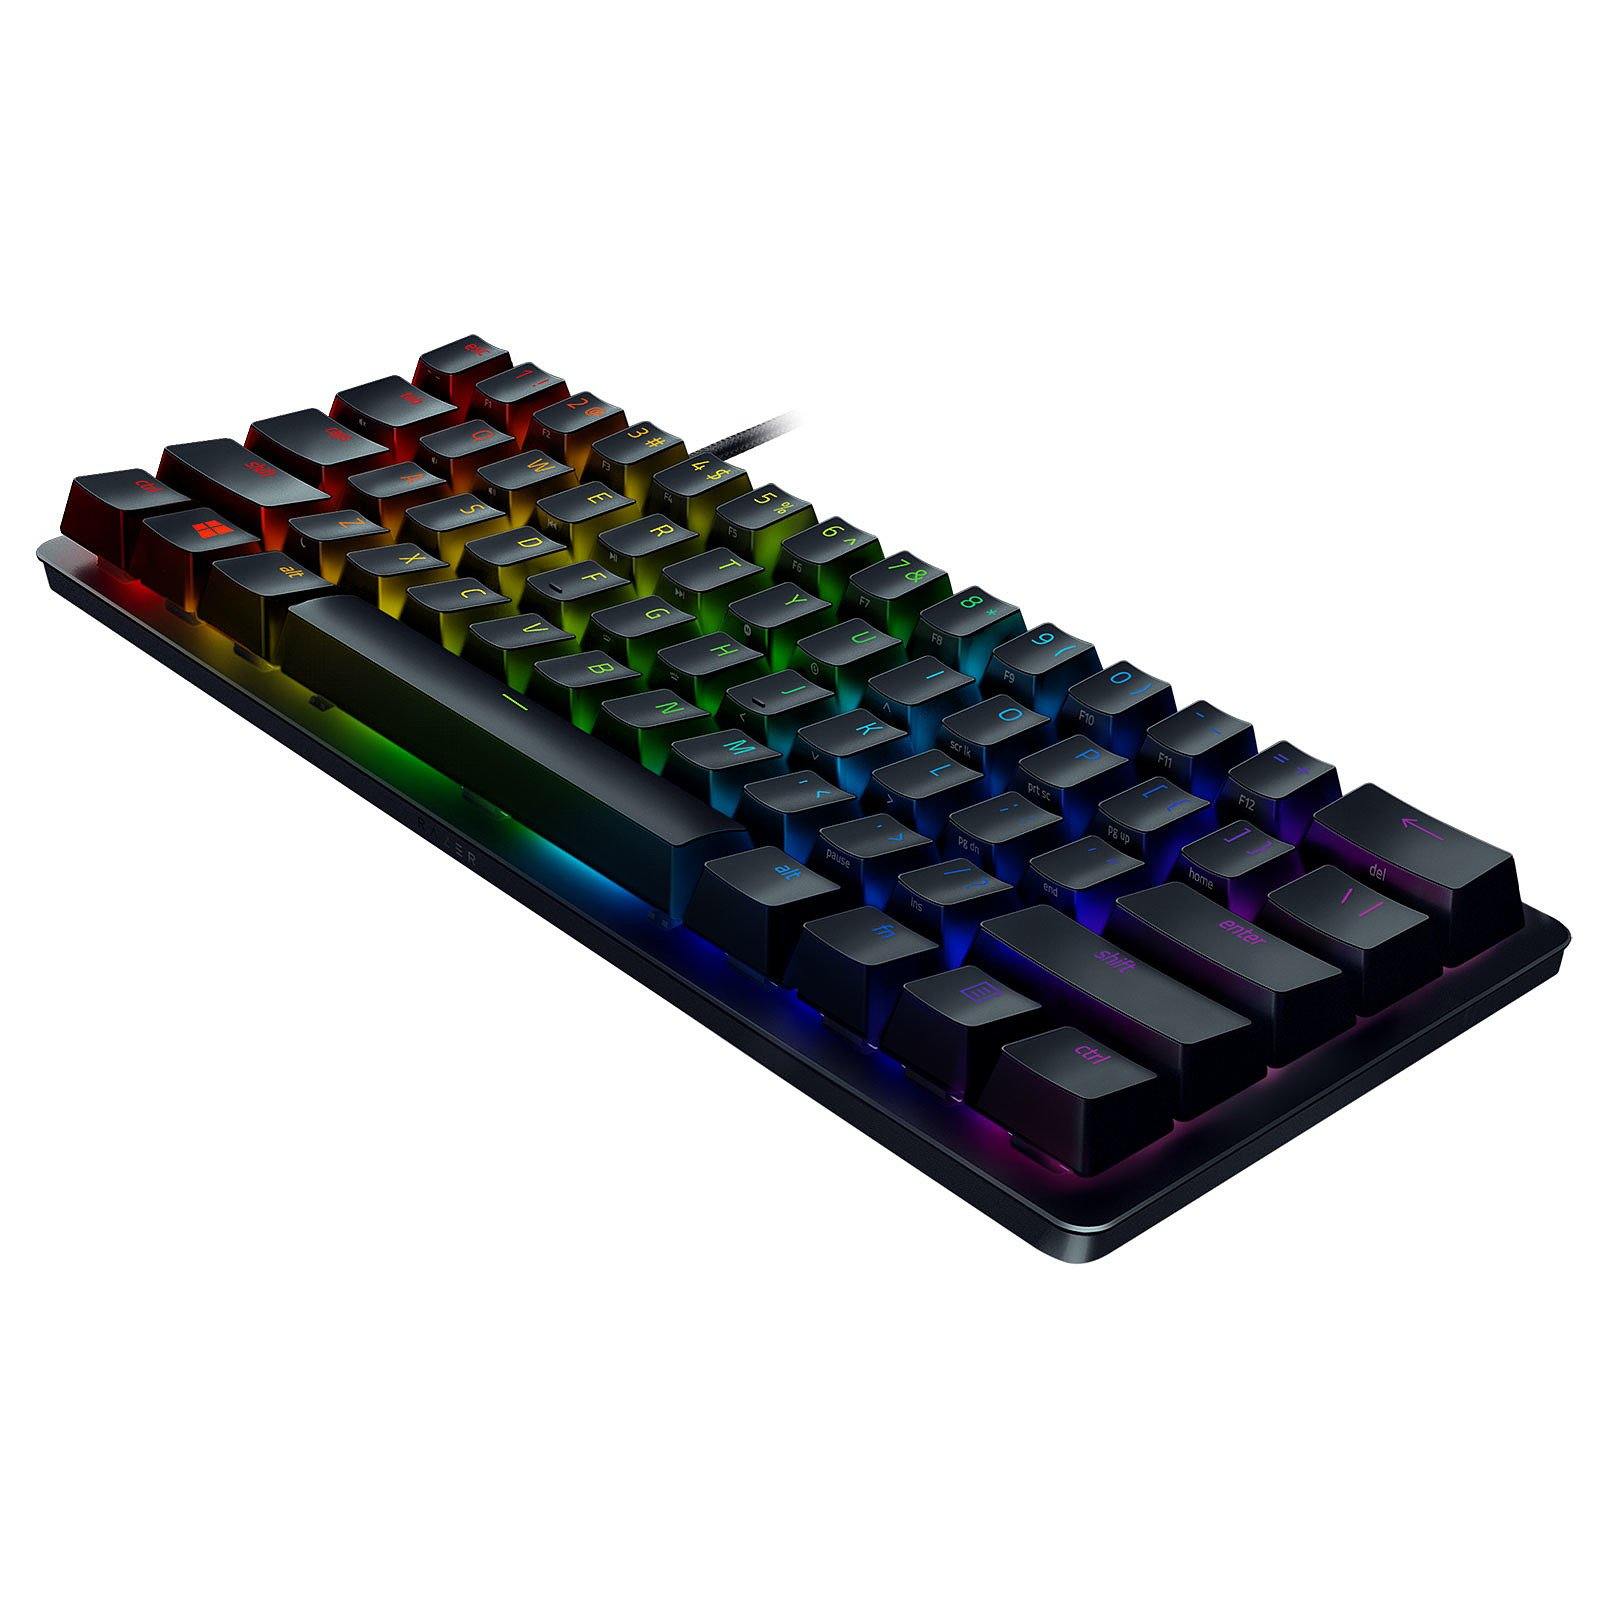 Razer Huntsman Mini (Razer Optical Purple) maroc prix clavier gamer pas cher - smartmarket.ma